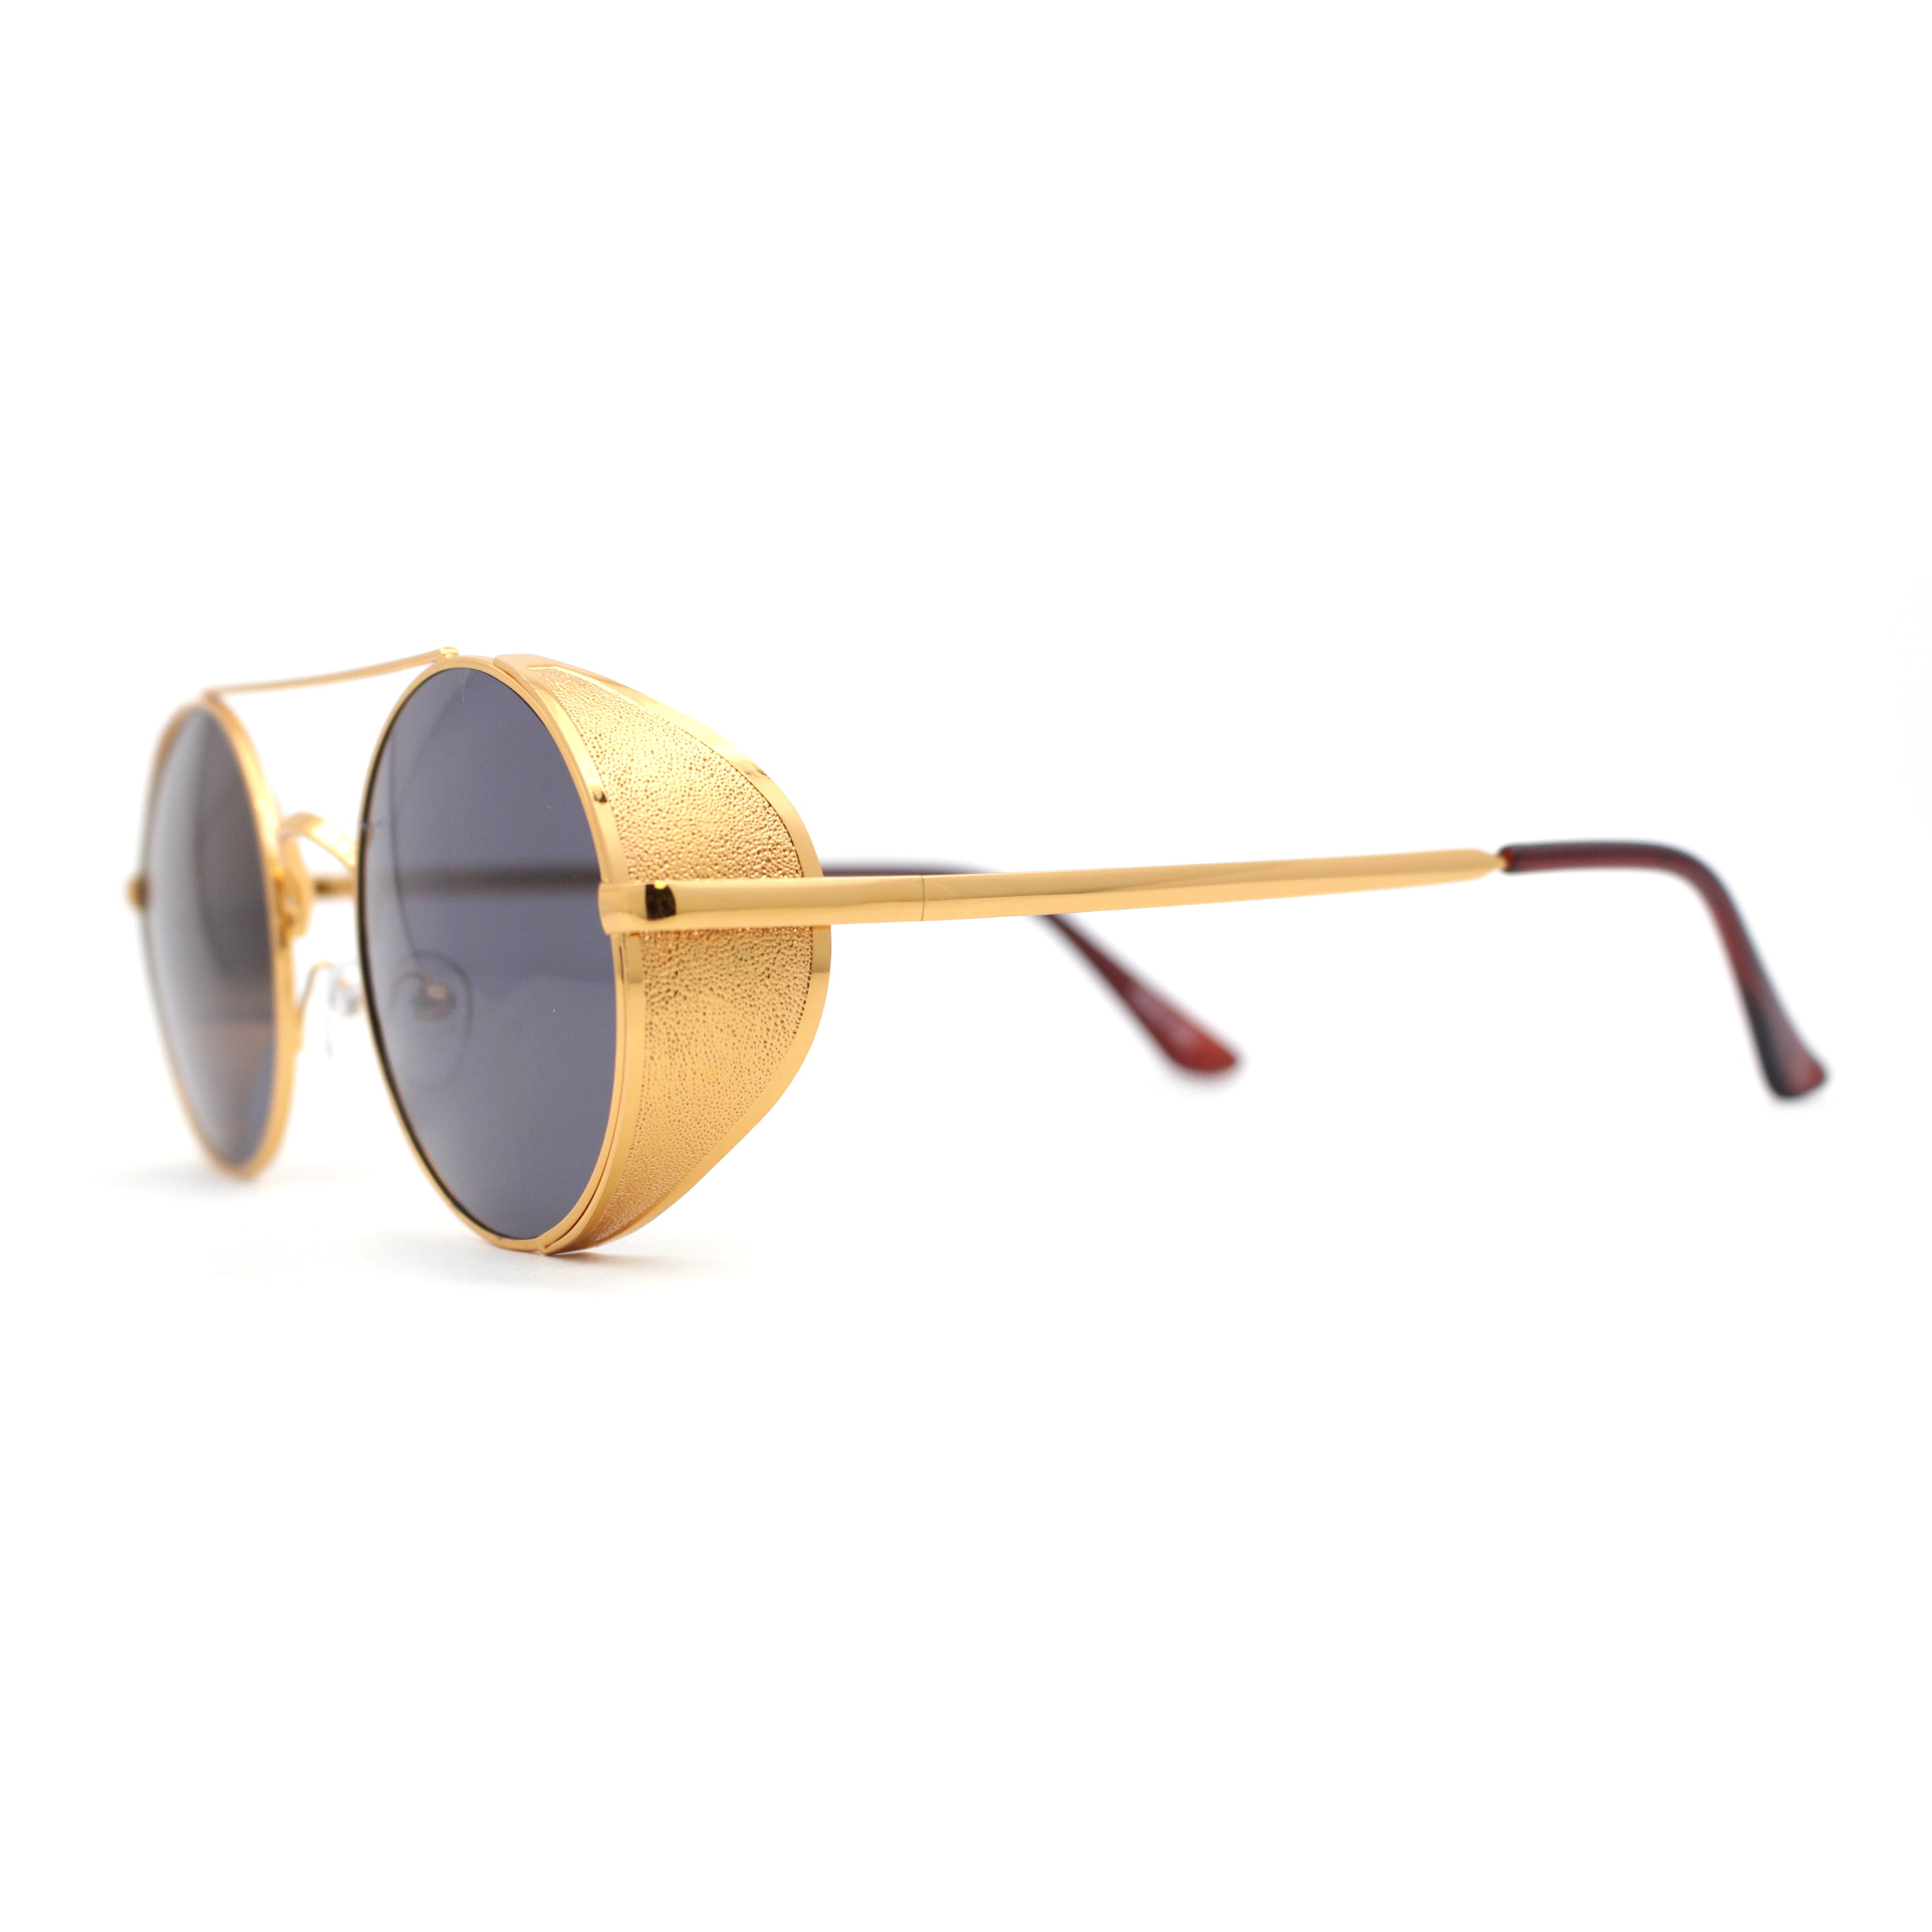 Circle Sunglasses - Retro Side Round Cafe Windbreaker Black Double Racer Lens Yellow Gold Bridge